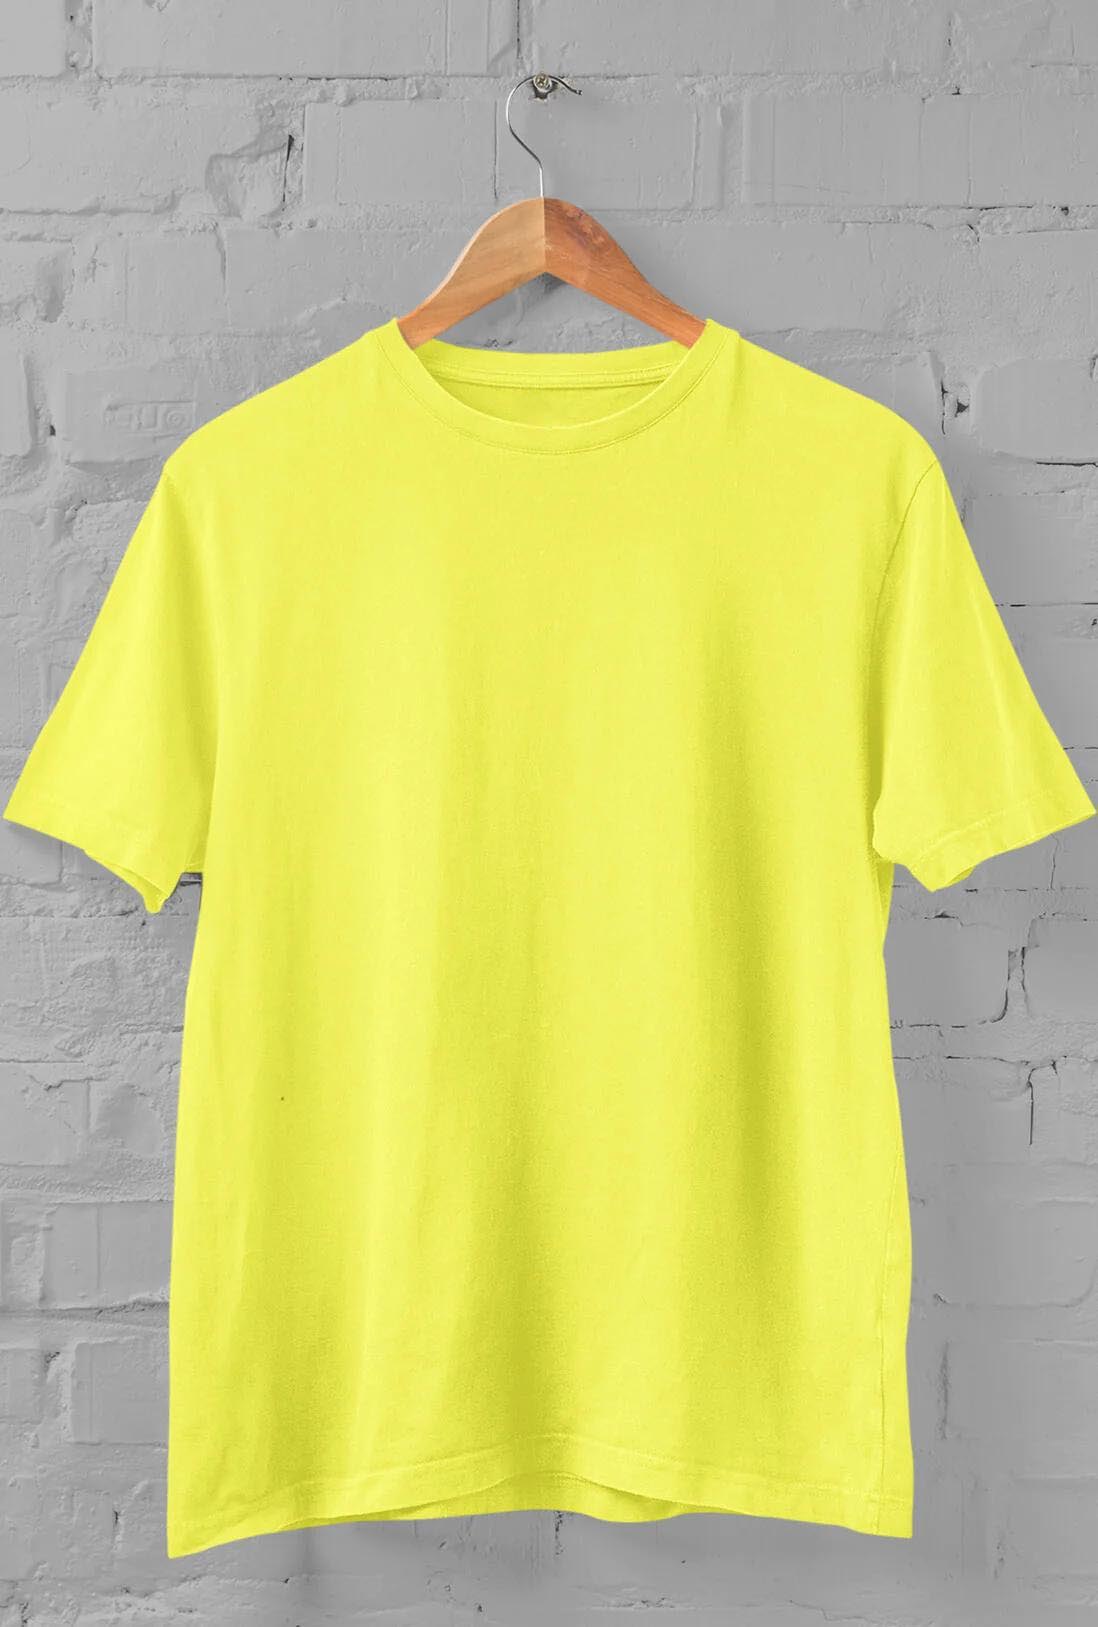 Men's Light Yellow Cotton T-Shirt